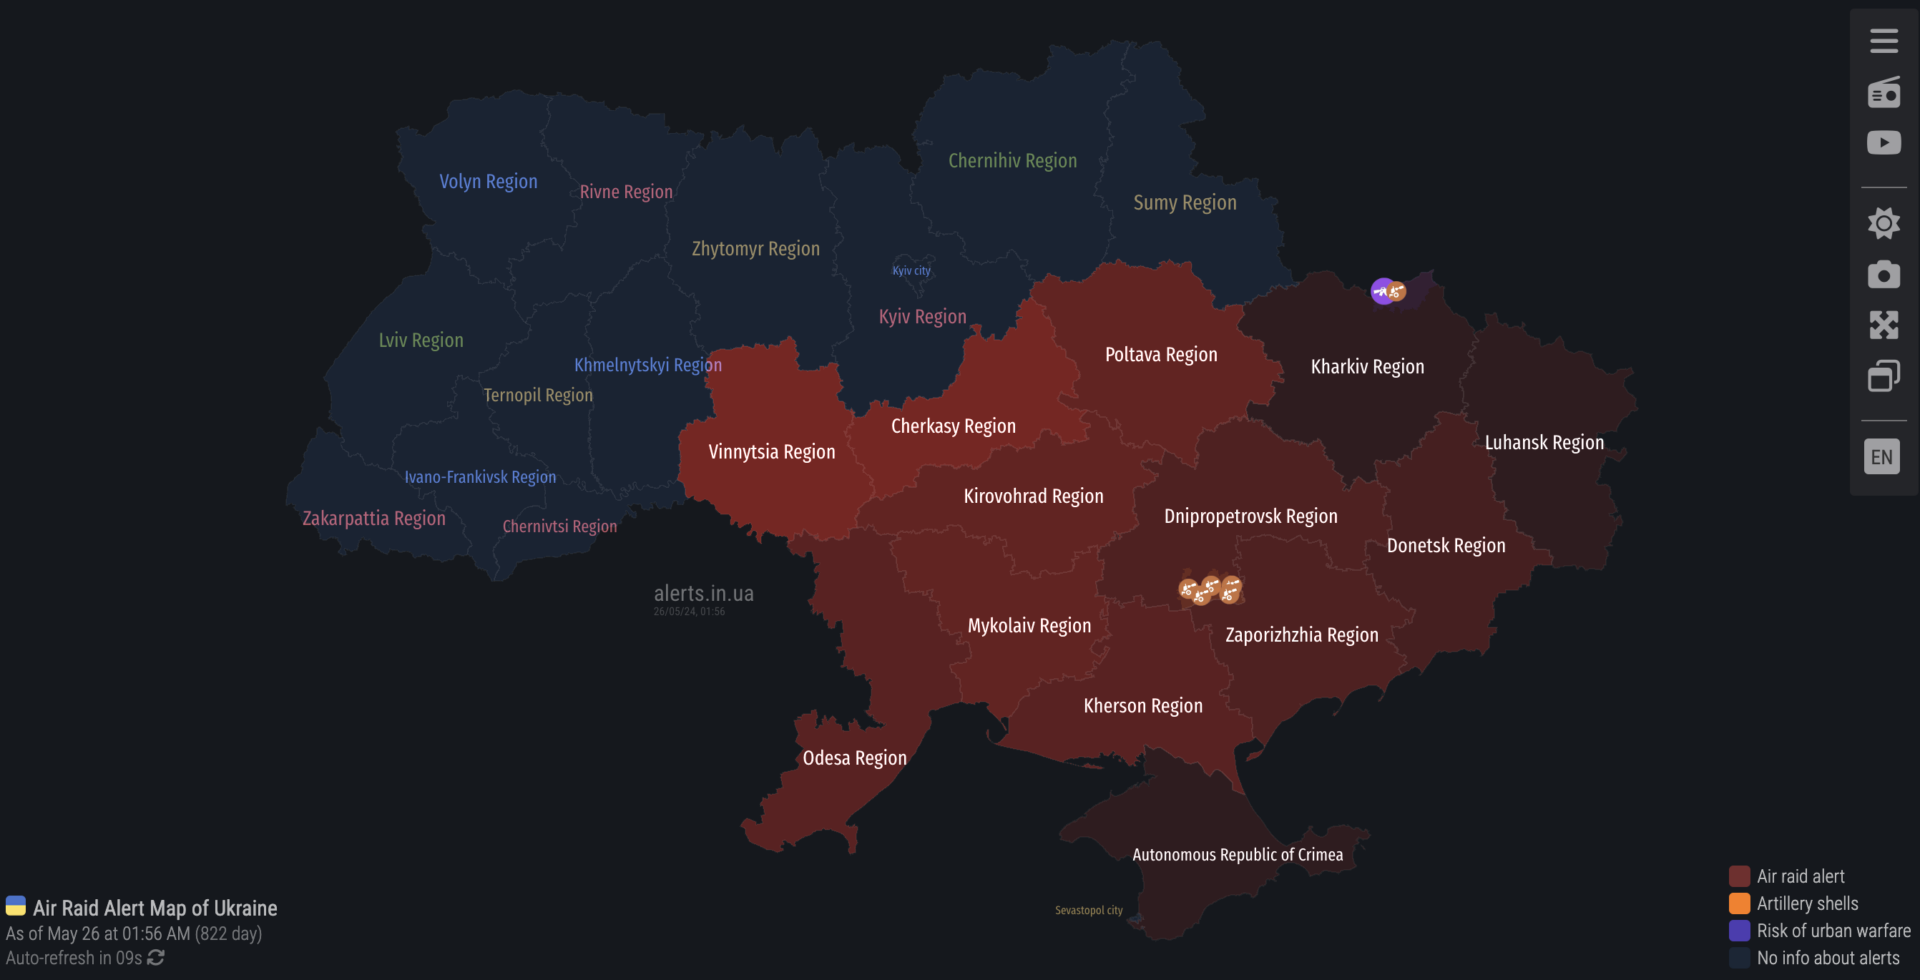 Air raid alert map of Ukraine. All of eastern and southern Ukraine is under air raid warnings.